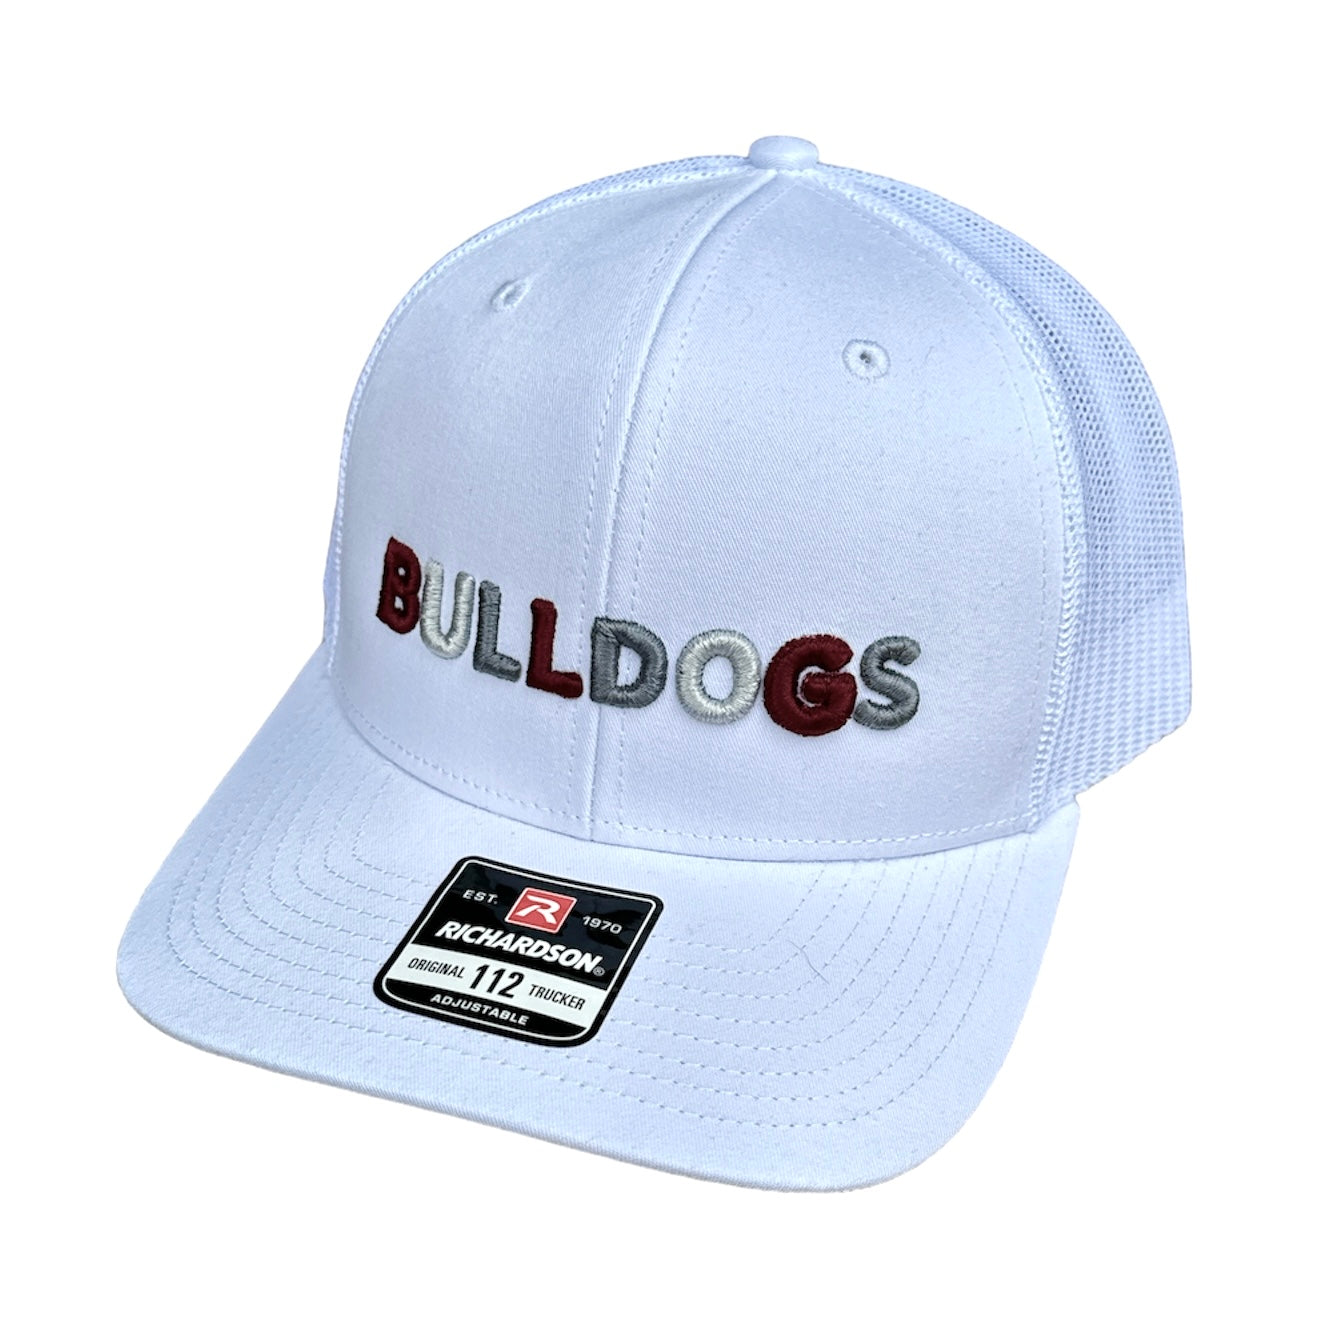 
                  
                    MSU “Bulldogs” Embroidered Adjustable White Trucker Hat
                  
                